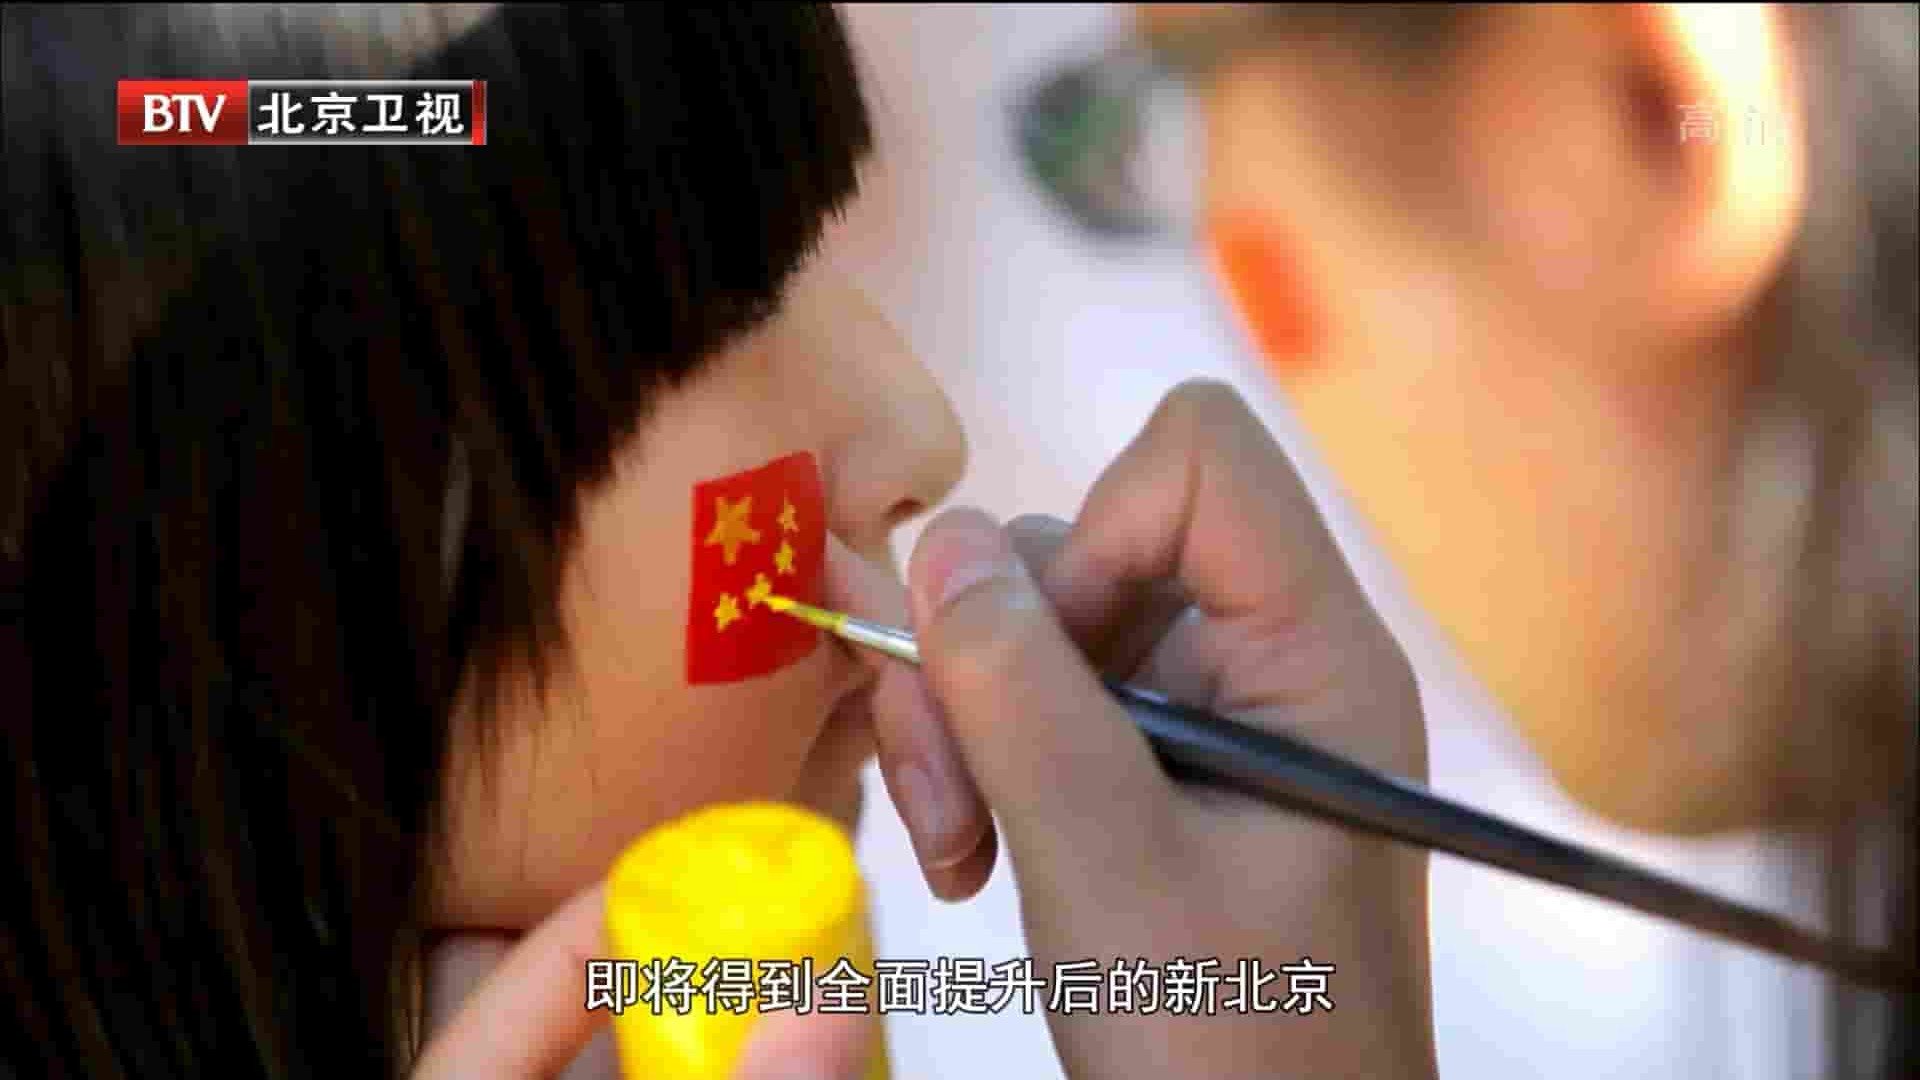 BTV纪录片《我的新北京 2017》全6集 国语中字 1080P高清网盘下载